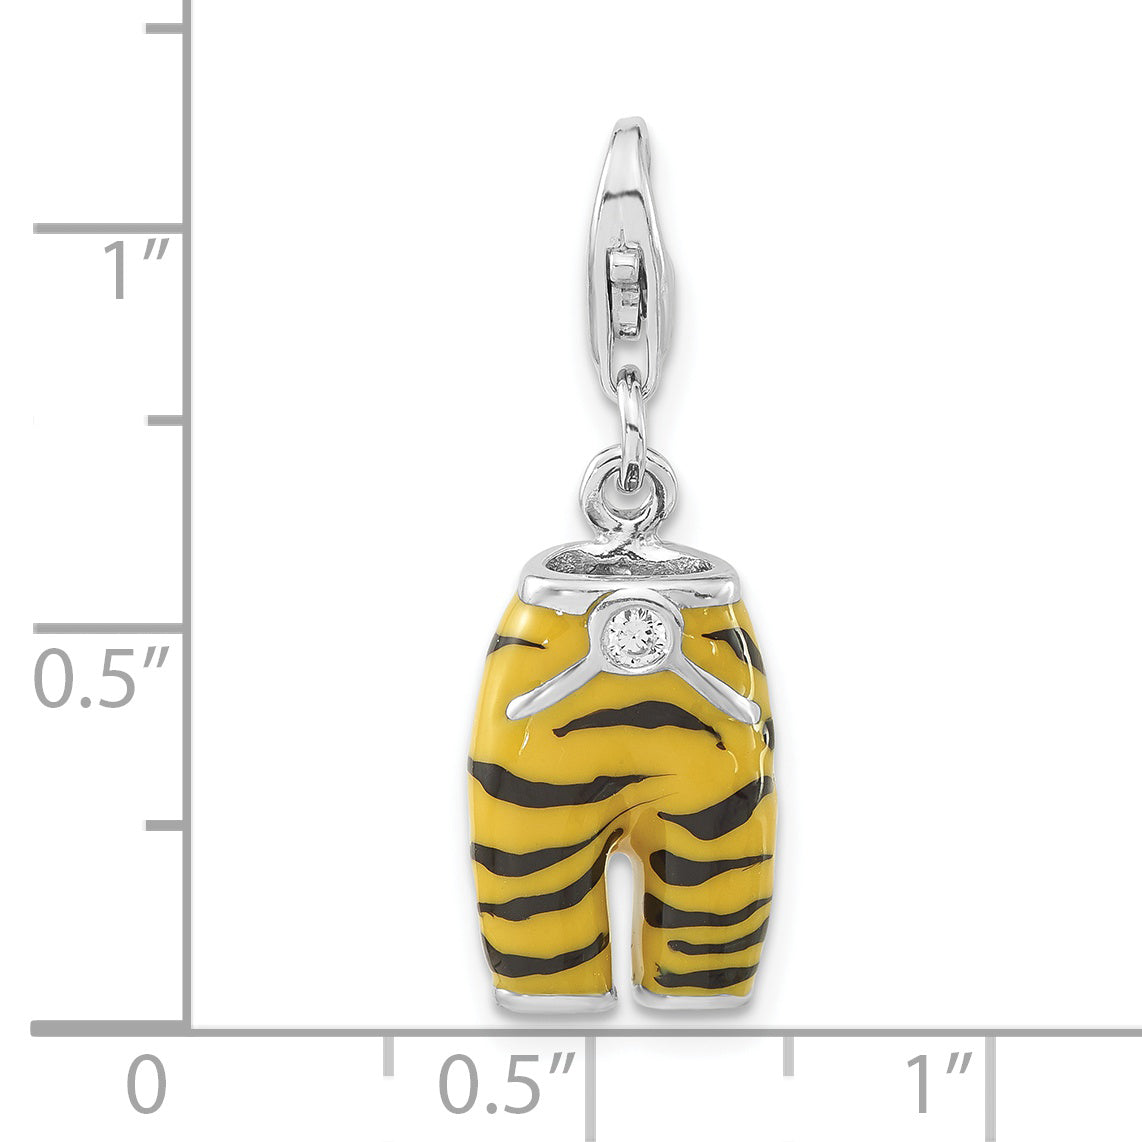 Sterling Silver Click-on CZ Enamel Tiger Pants Charm